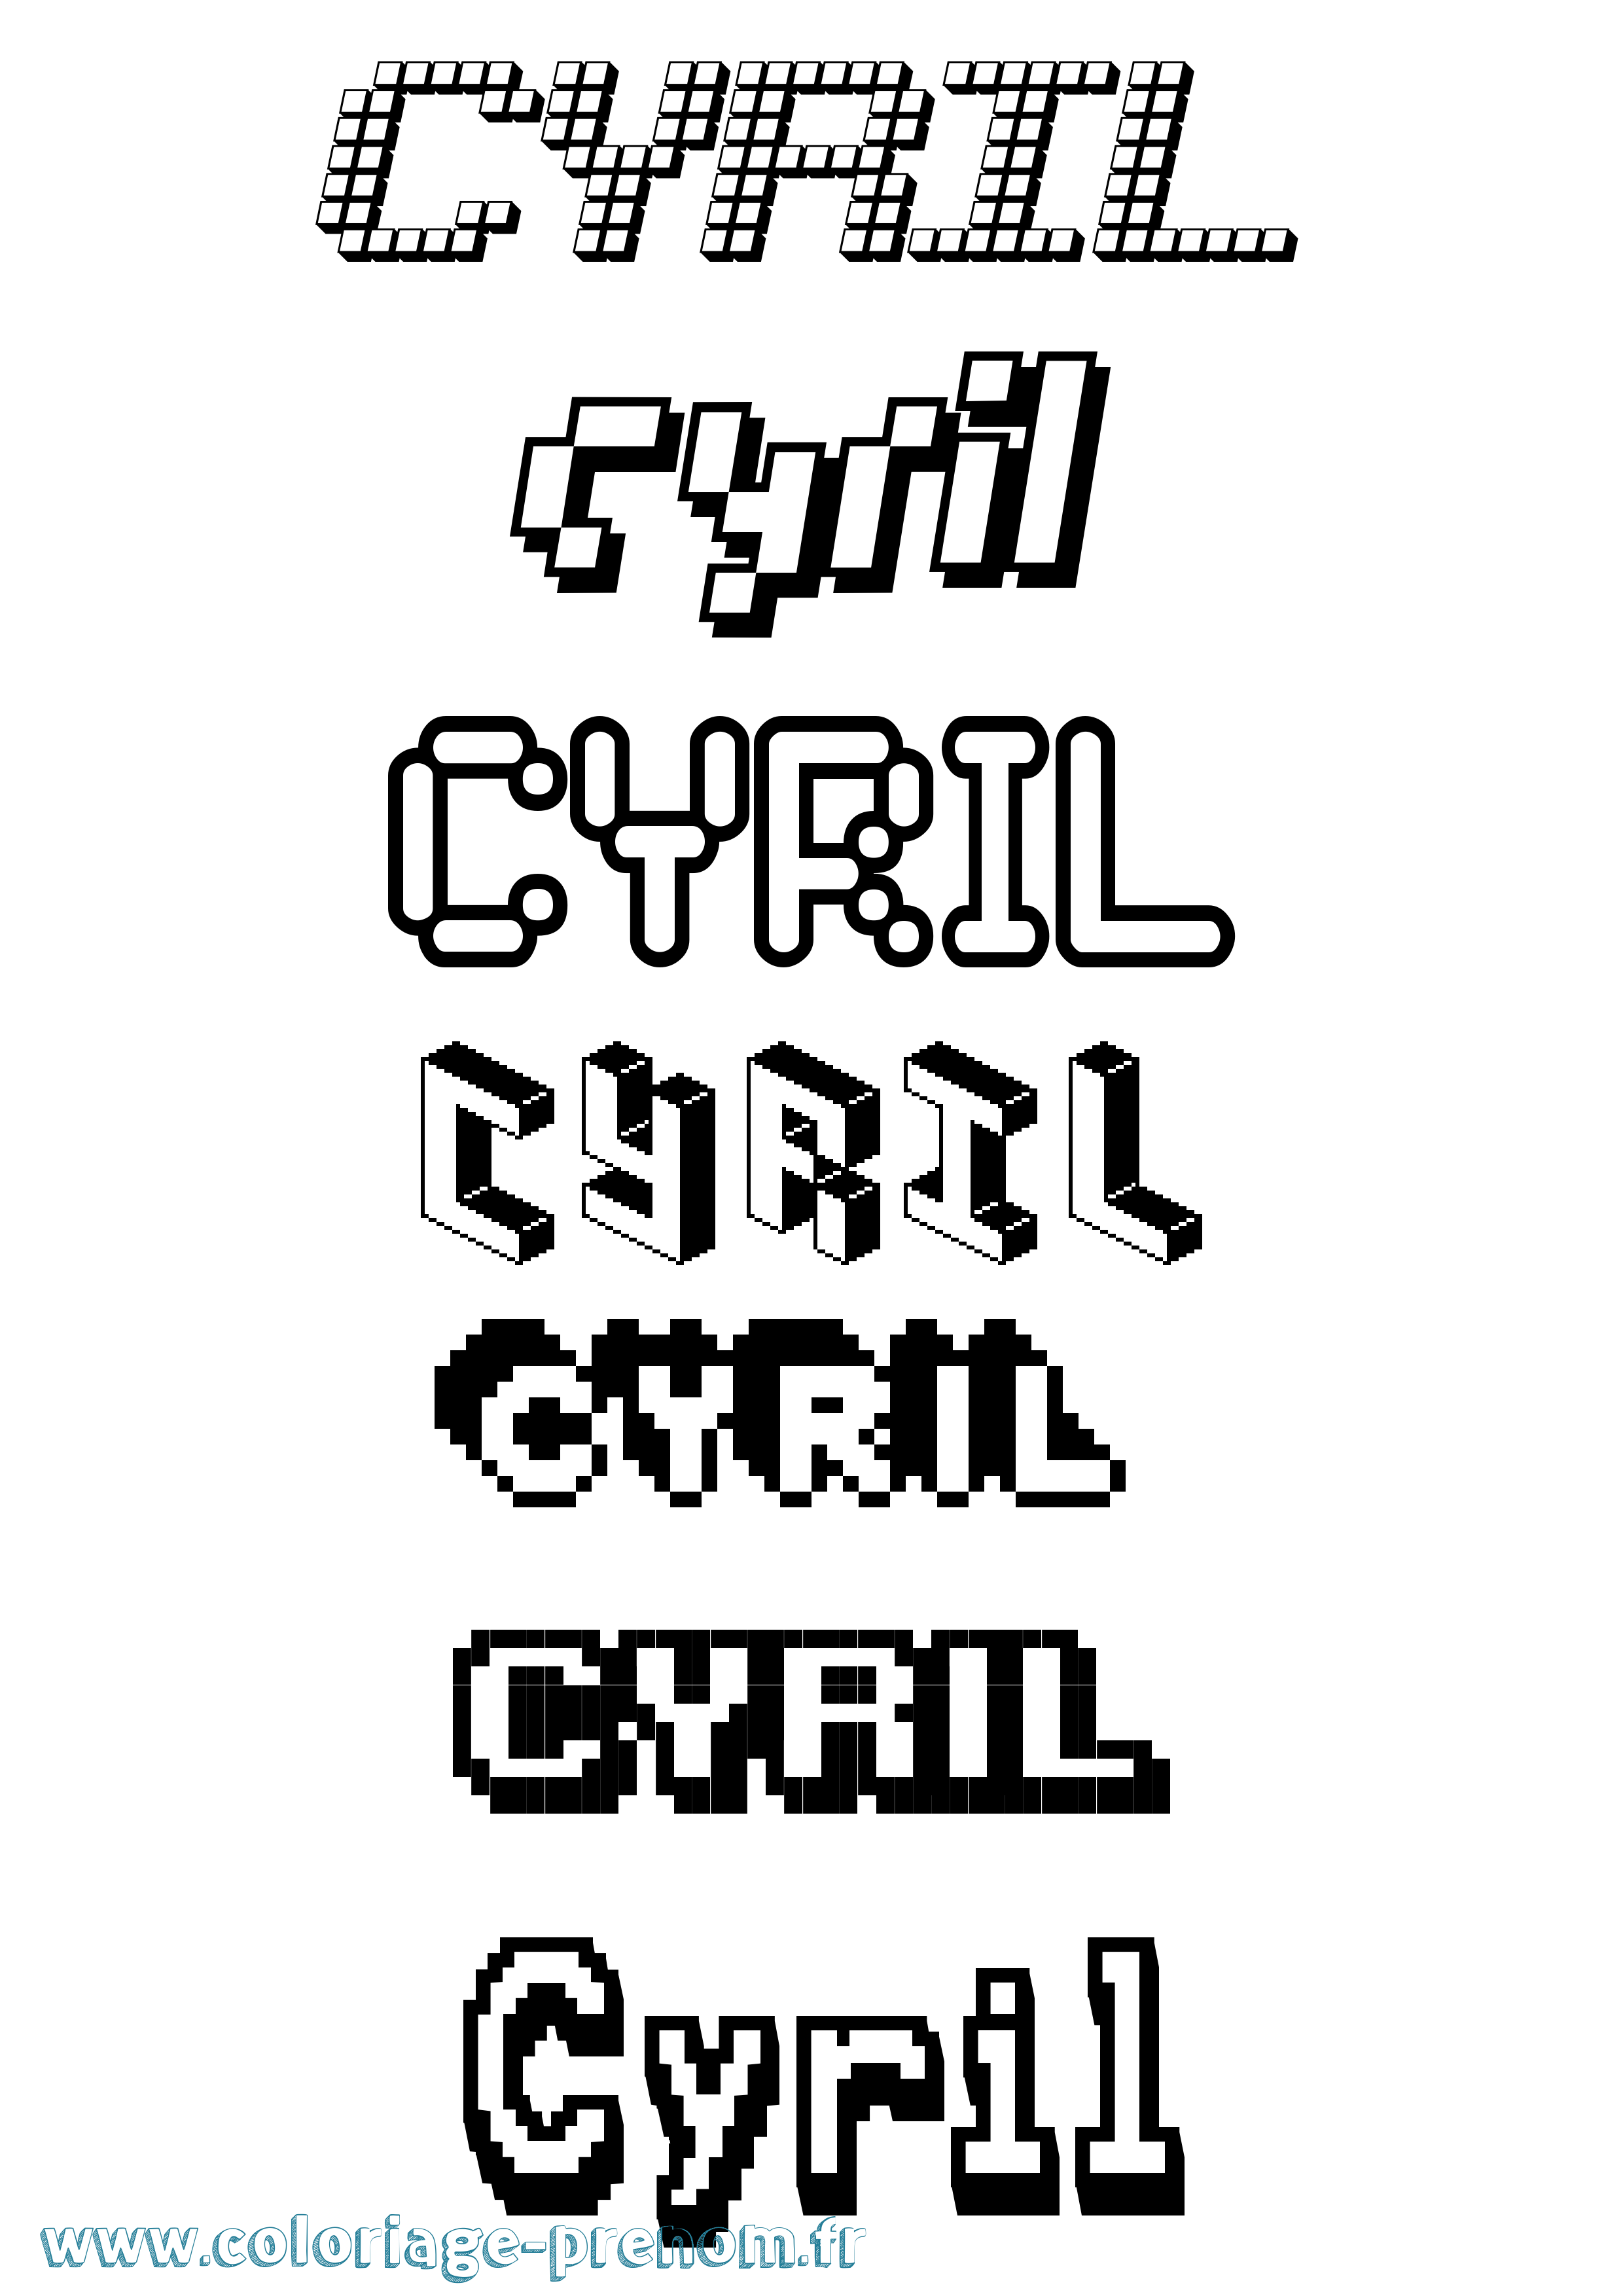 Coloriage prénom Cyril